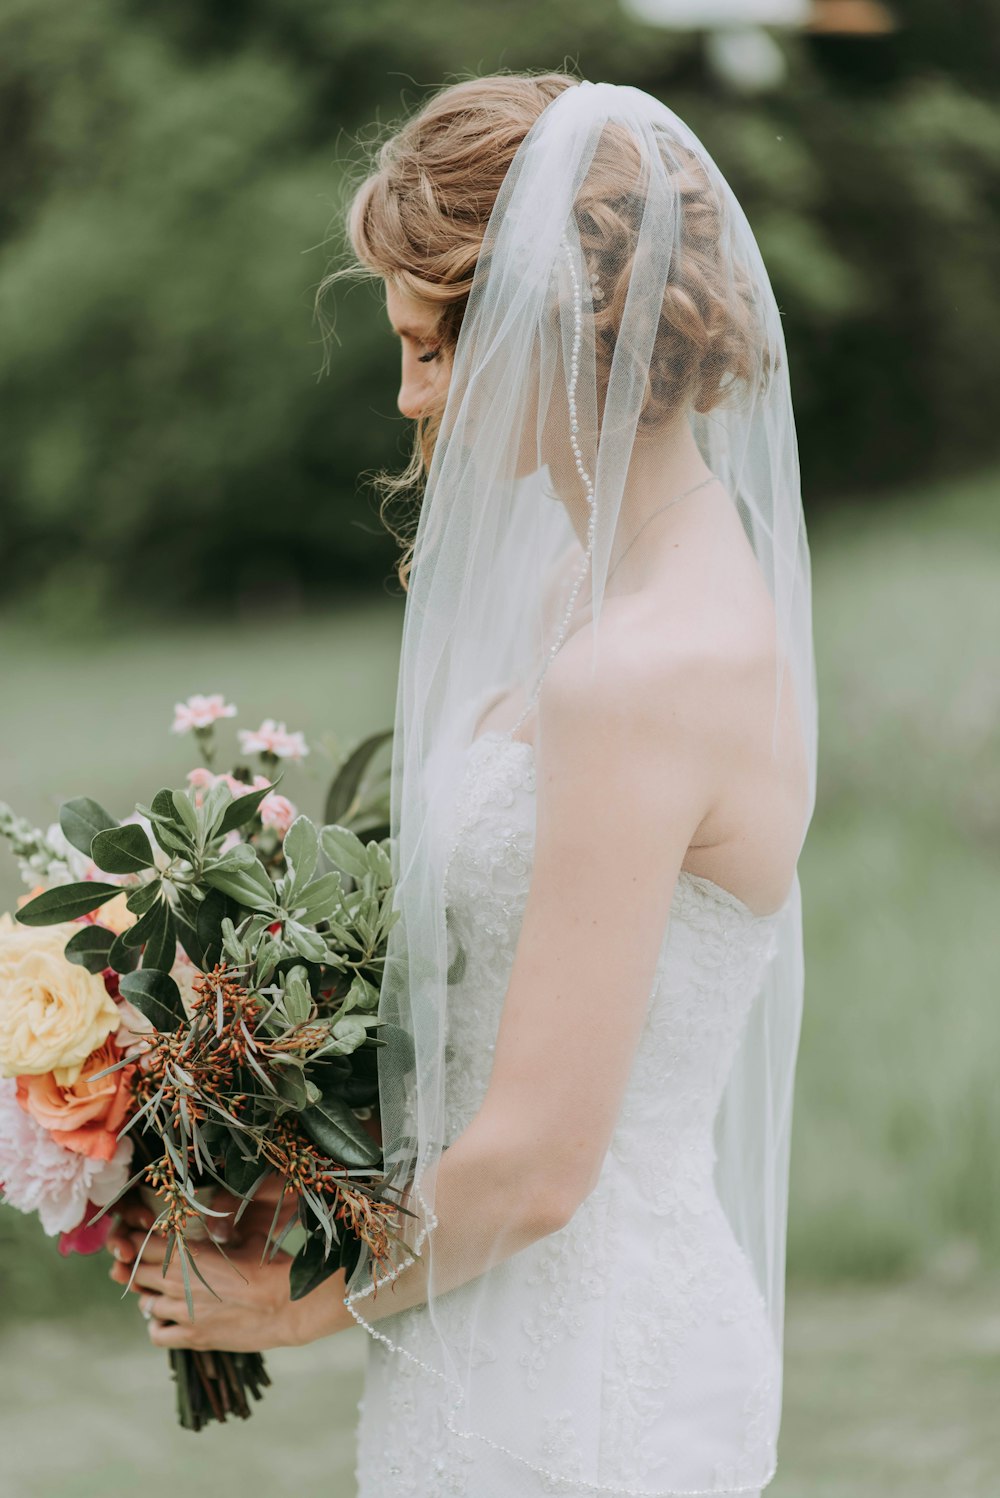 woman wearing white wedding dress with veil